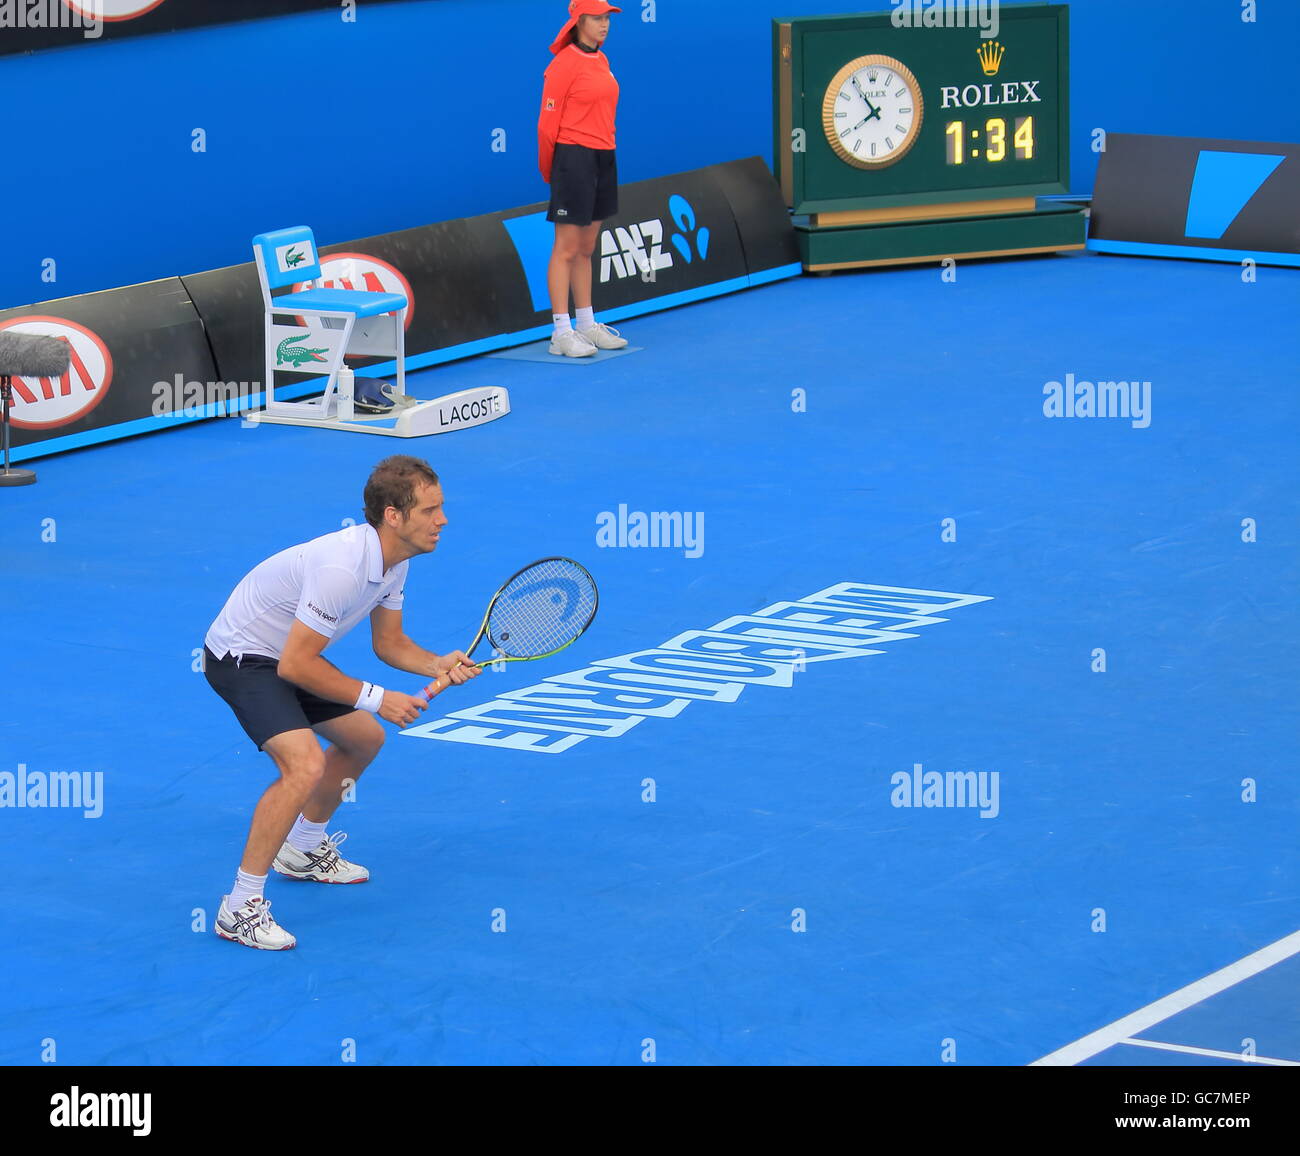 Richard Gasquet play at Australian Open in Melbourne Australia. Stock Photo